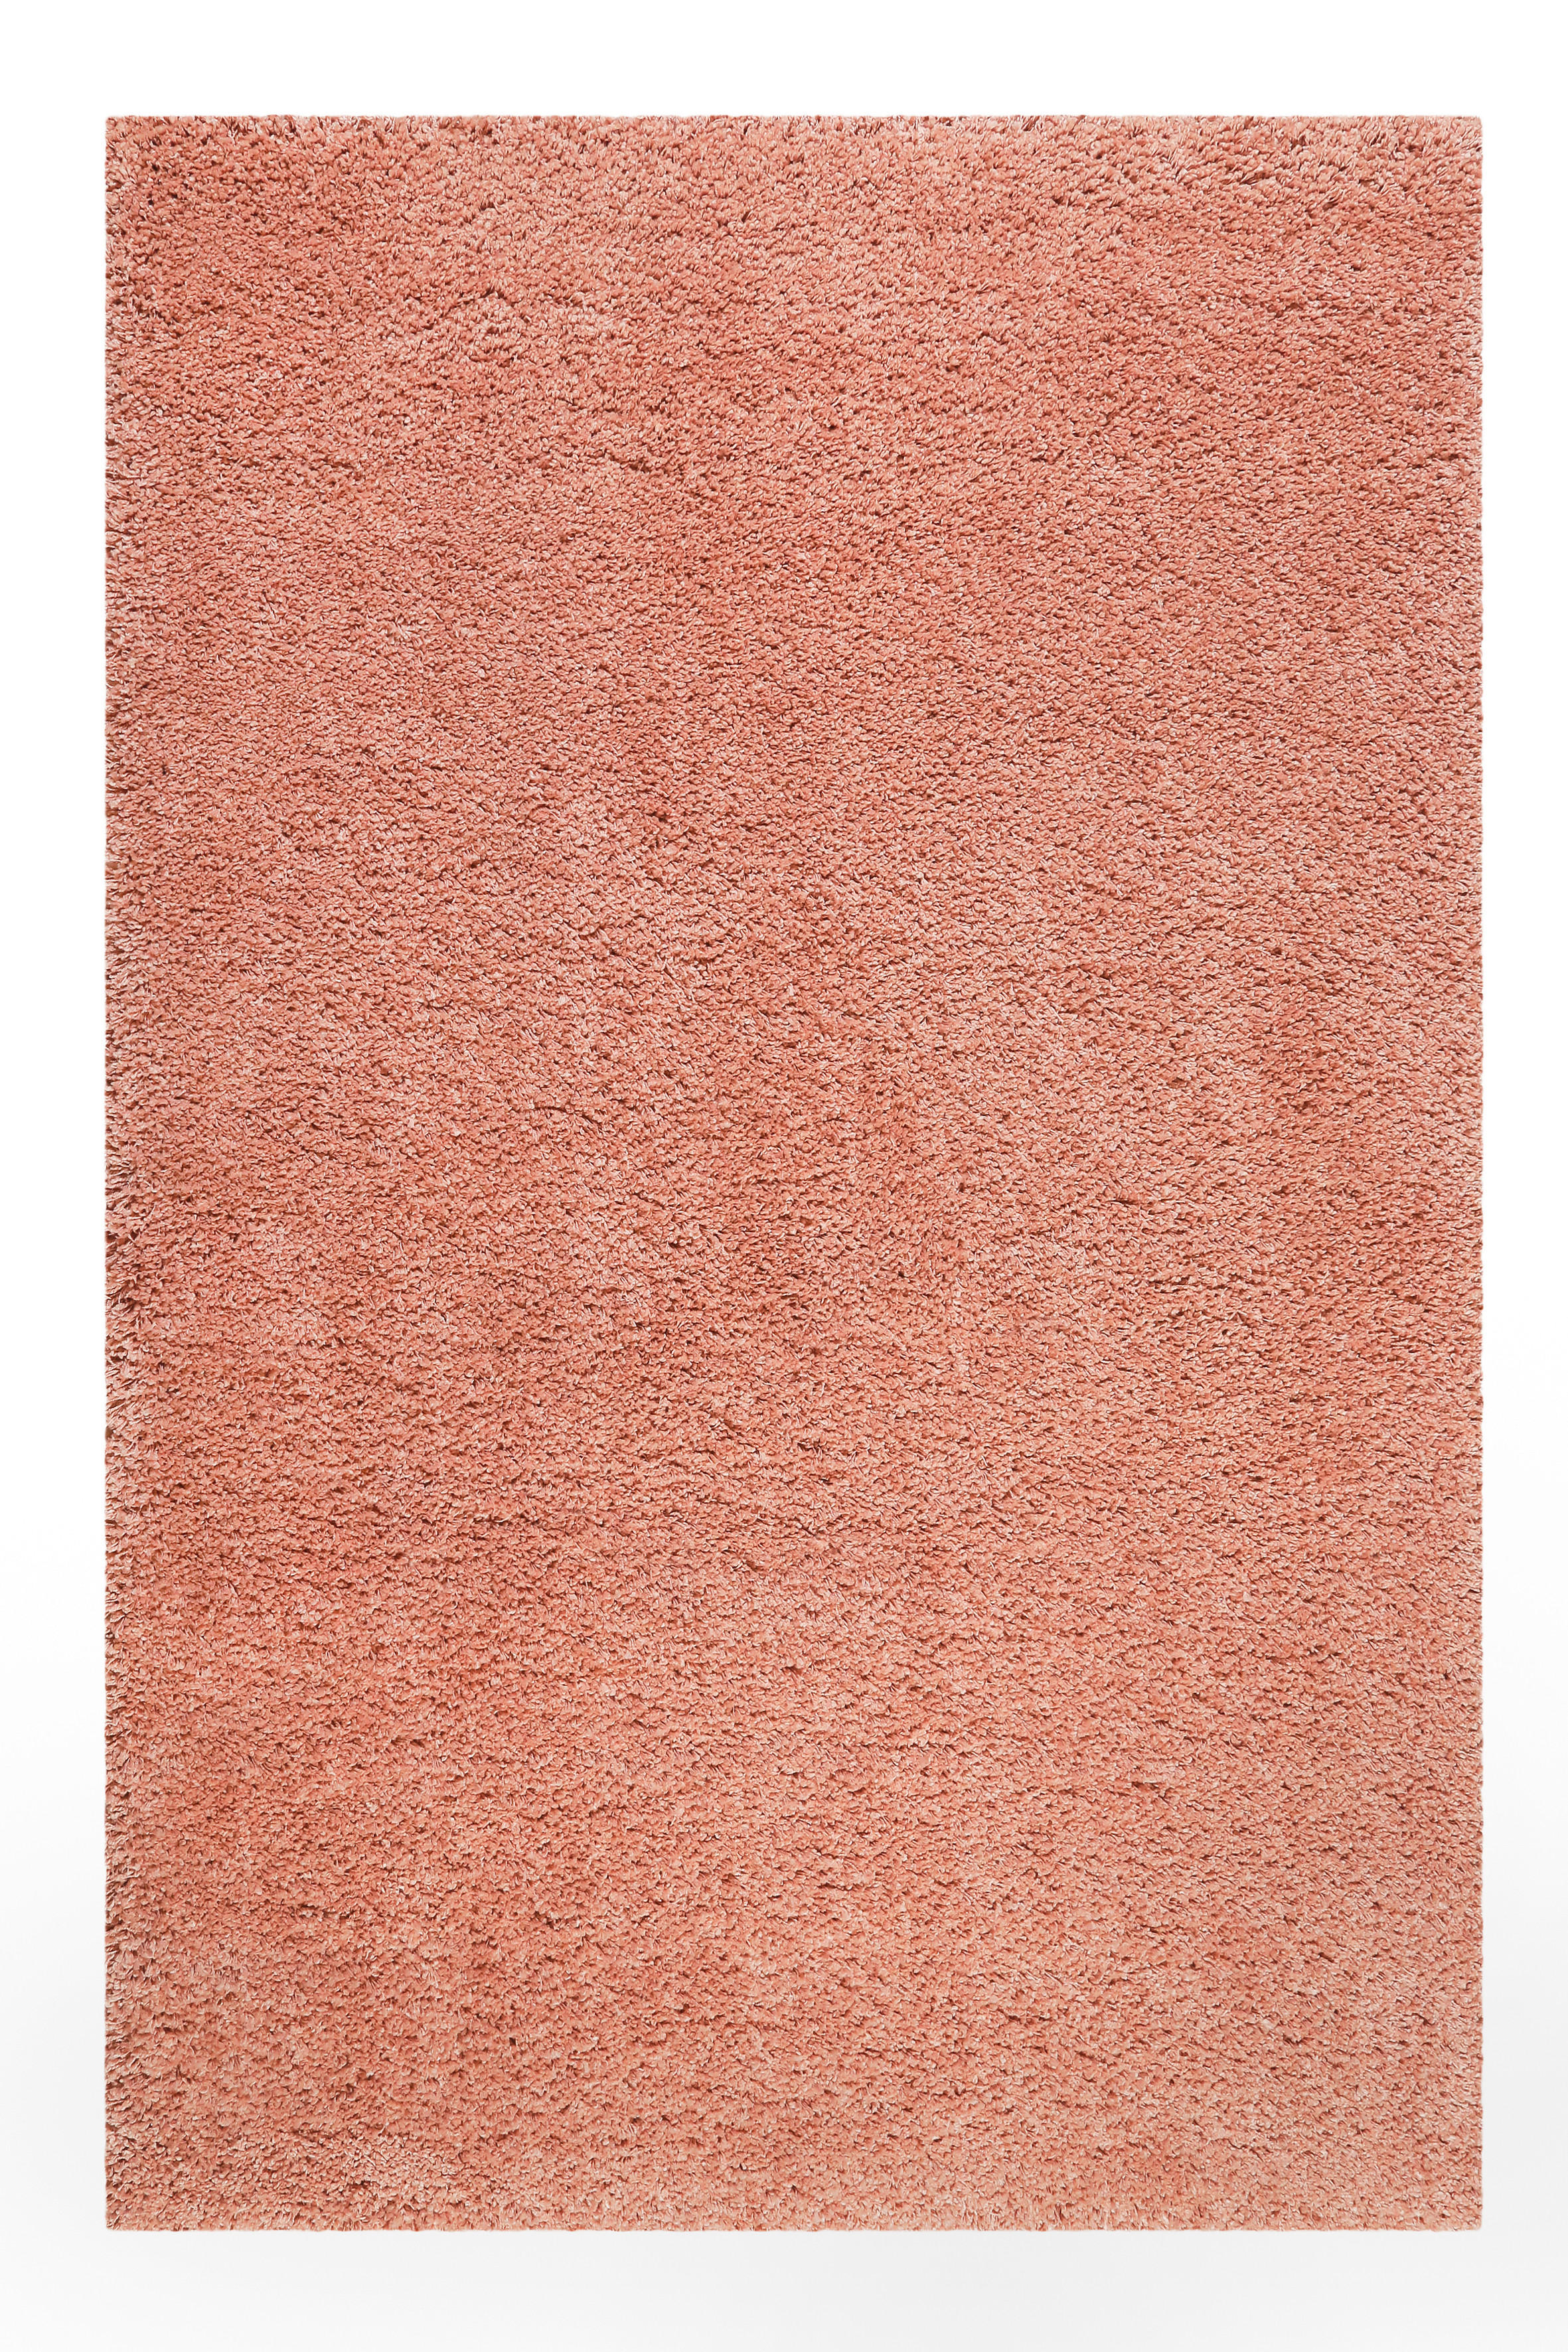 WEBTEPPICH 133/200 cm Live Nature  - Hellrosa/Rosa, KONVENTIONELL, Textil (133/200cm) - Esprit